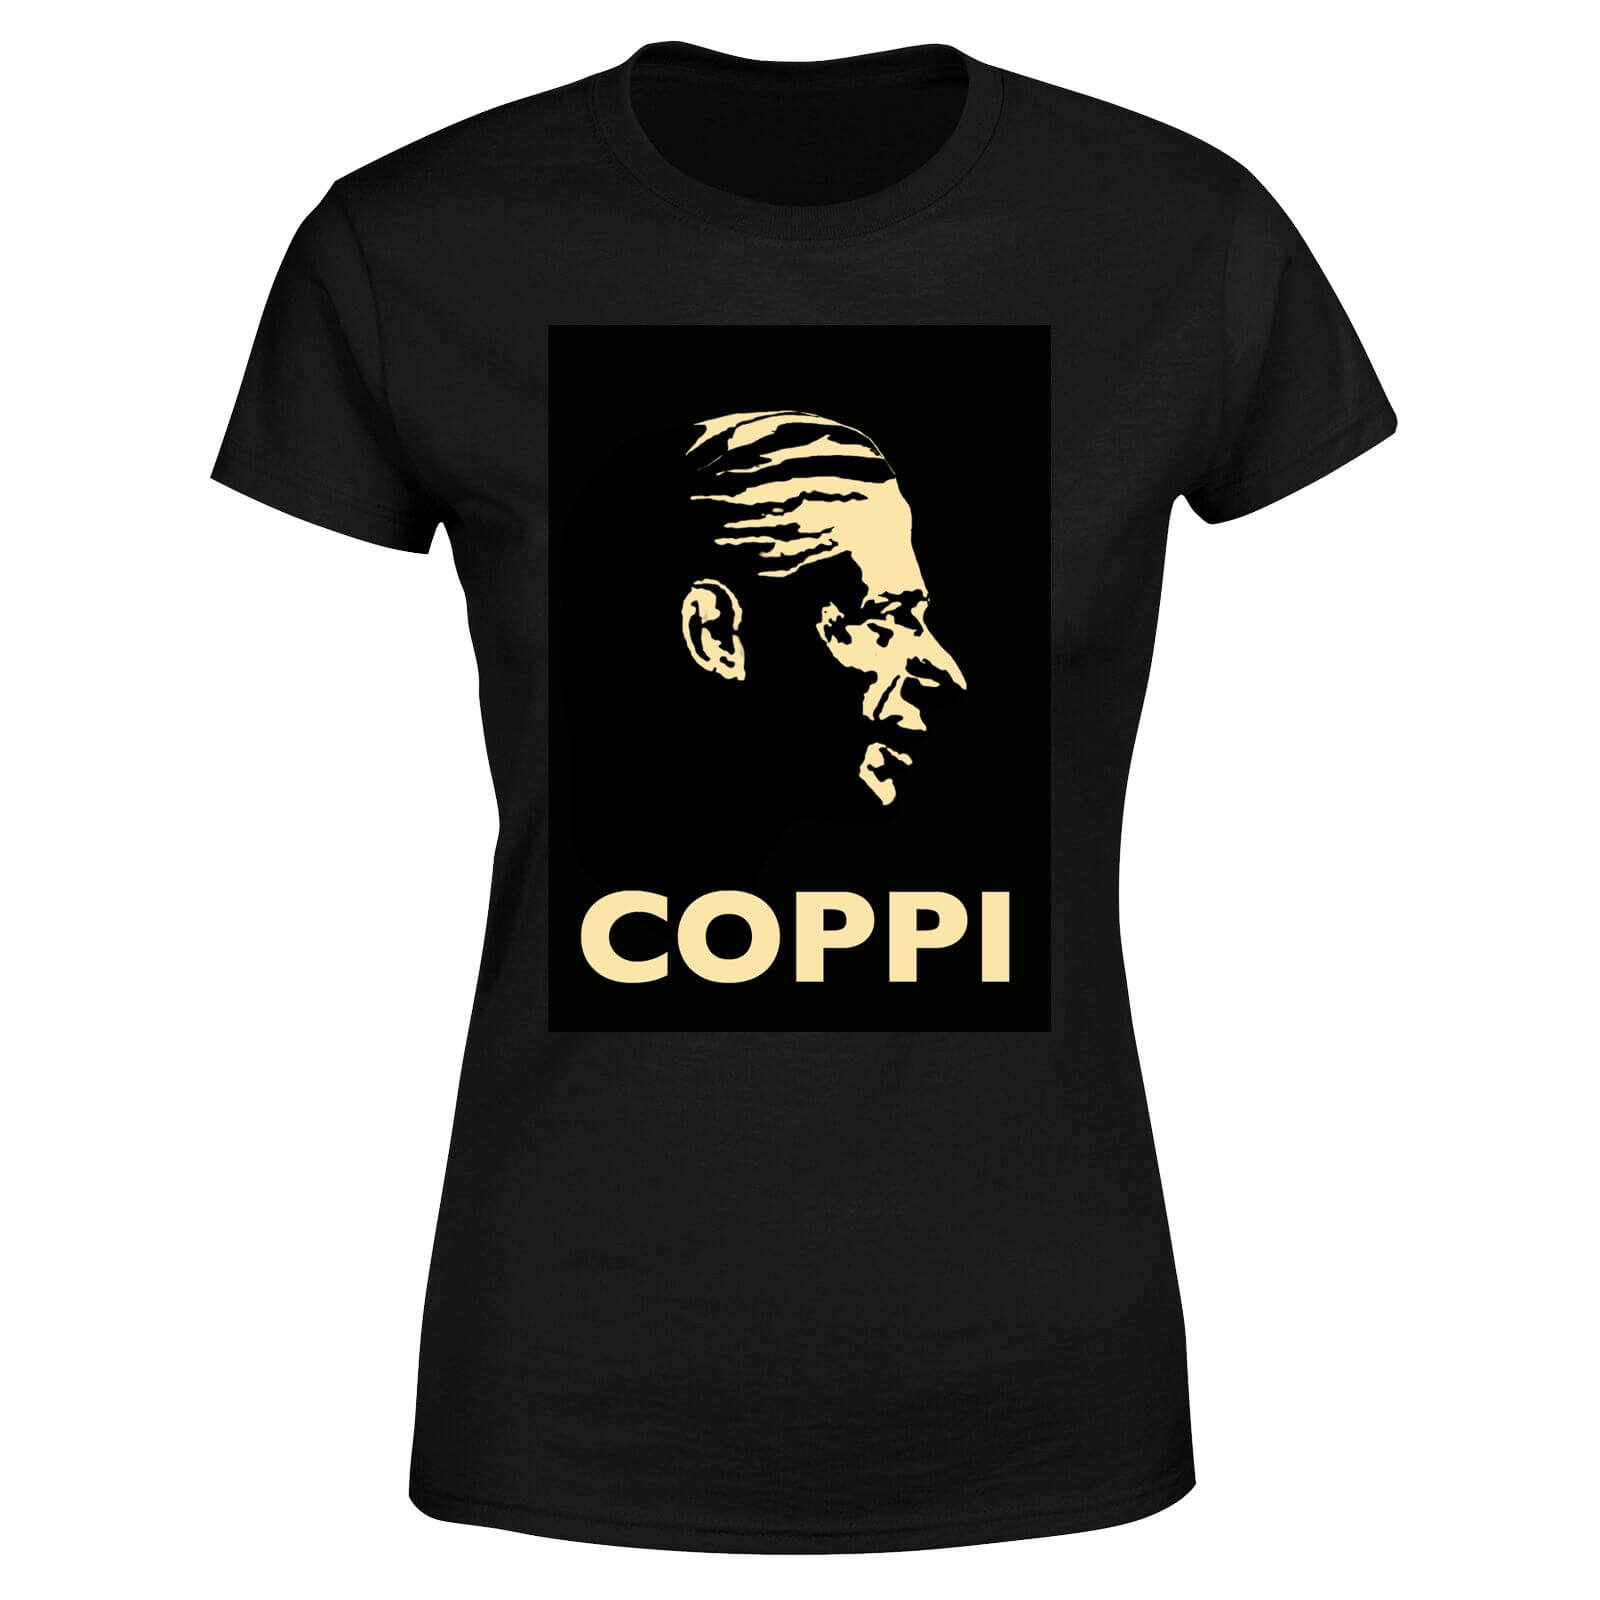 Coppi Women's T-Shirt - Black - XXL - Black